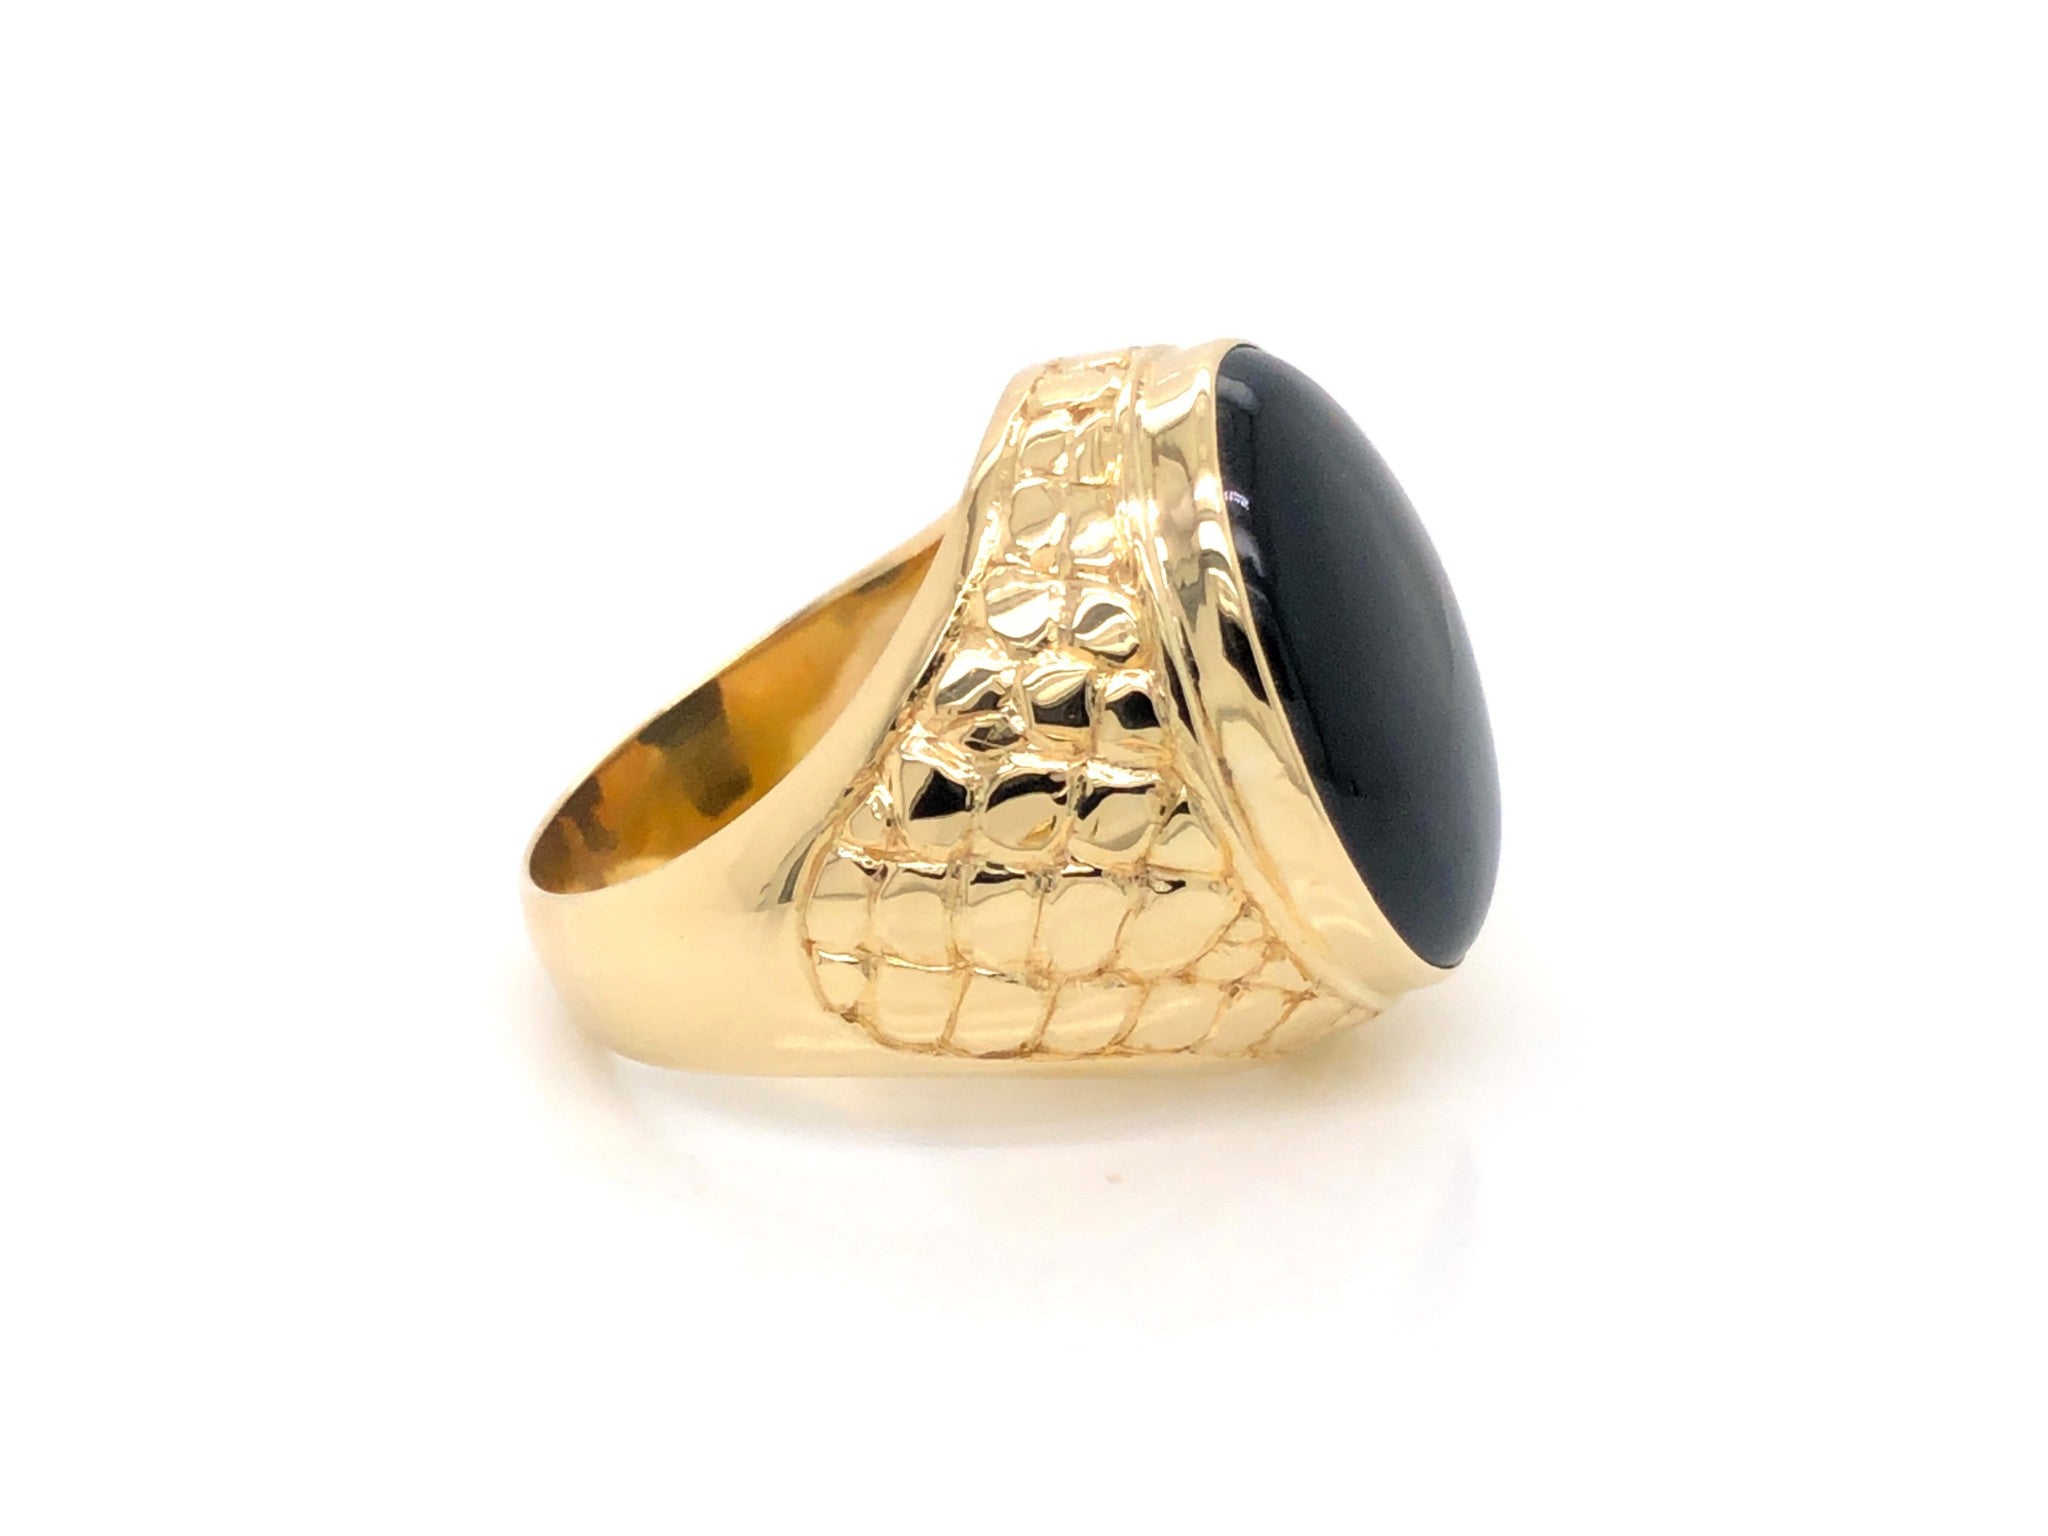 Vintage Mens Ring,Vintage Men's Large Black Jade Ring with Reptile Design in 14k Yellow Gold